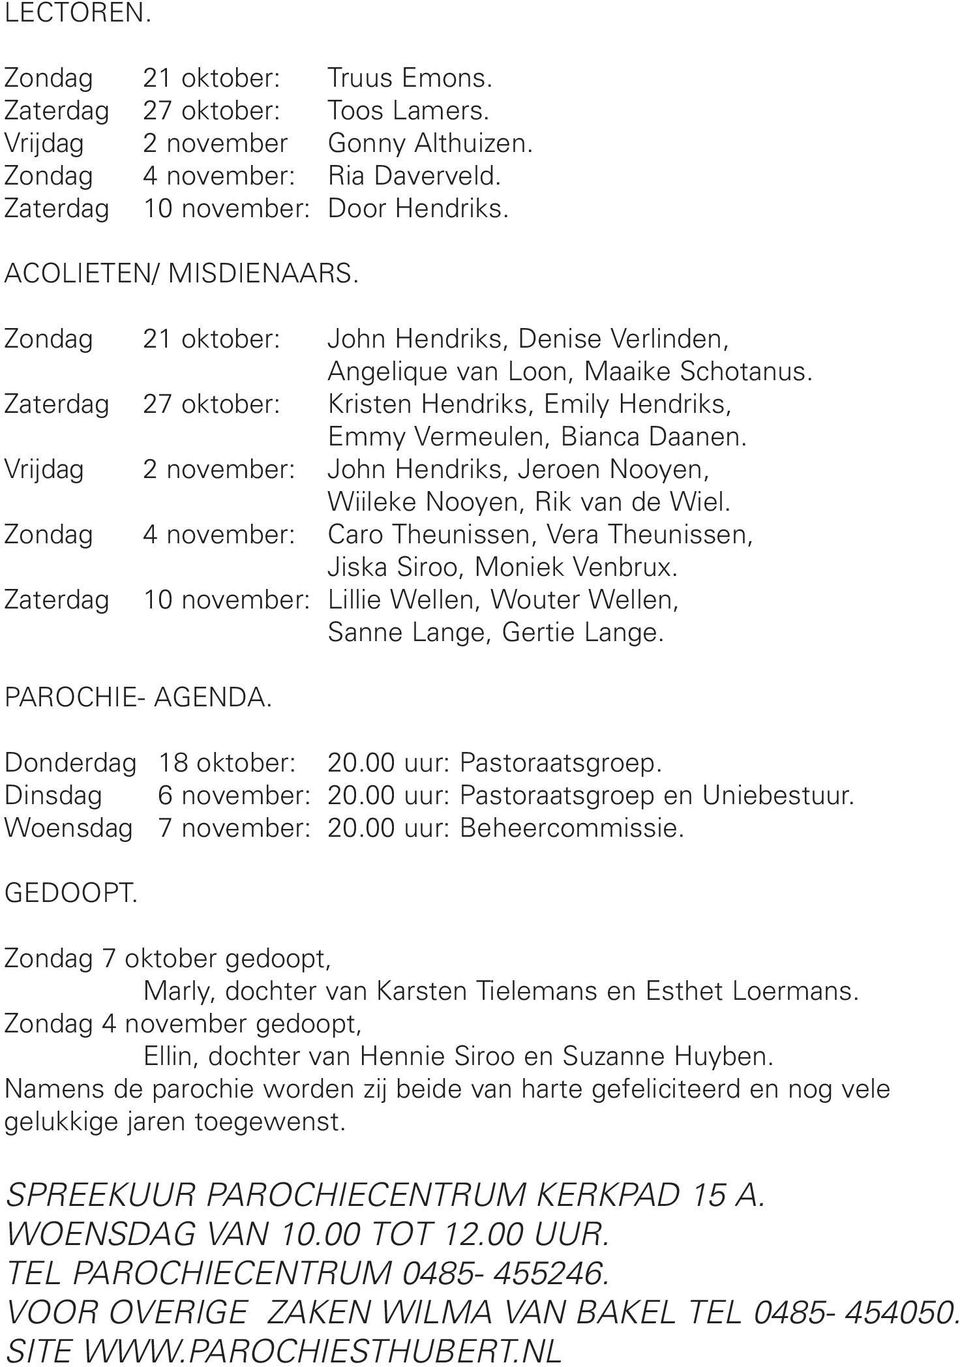 Vrijdag 2 november: John Hendriks, Jeroen Nooyen, Wiileke Nooyen, Rik van de Wiel. Zondag 4 november: Caro Theunissen, Vera Theunissen, Jiska Siroo, Moniek Venbrux.